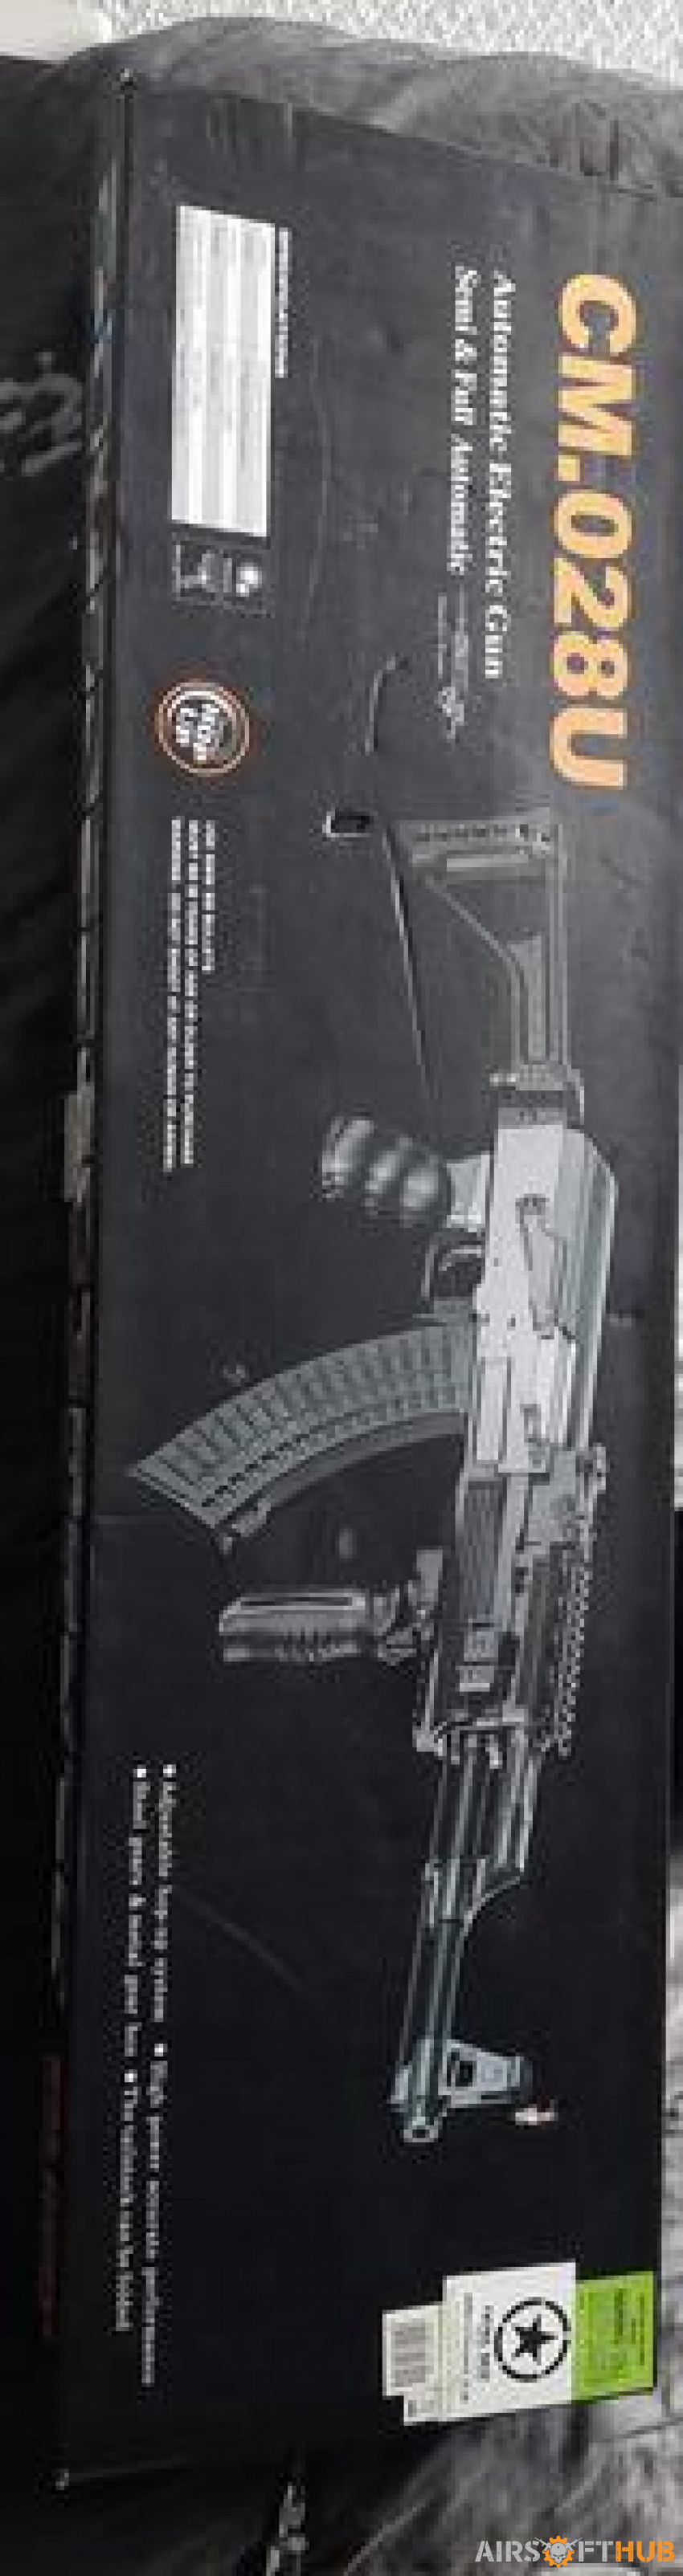 Cyma 028U AK-47 - Used airsoft equipment